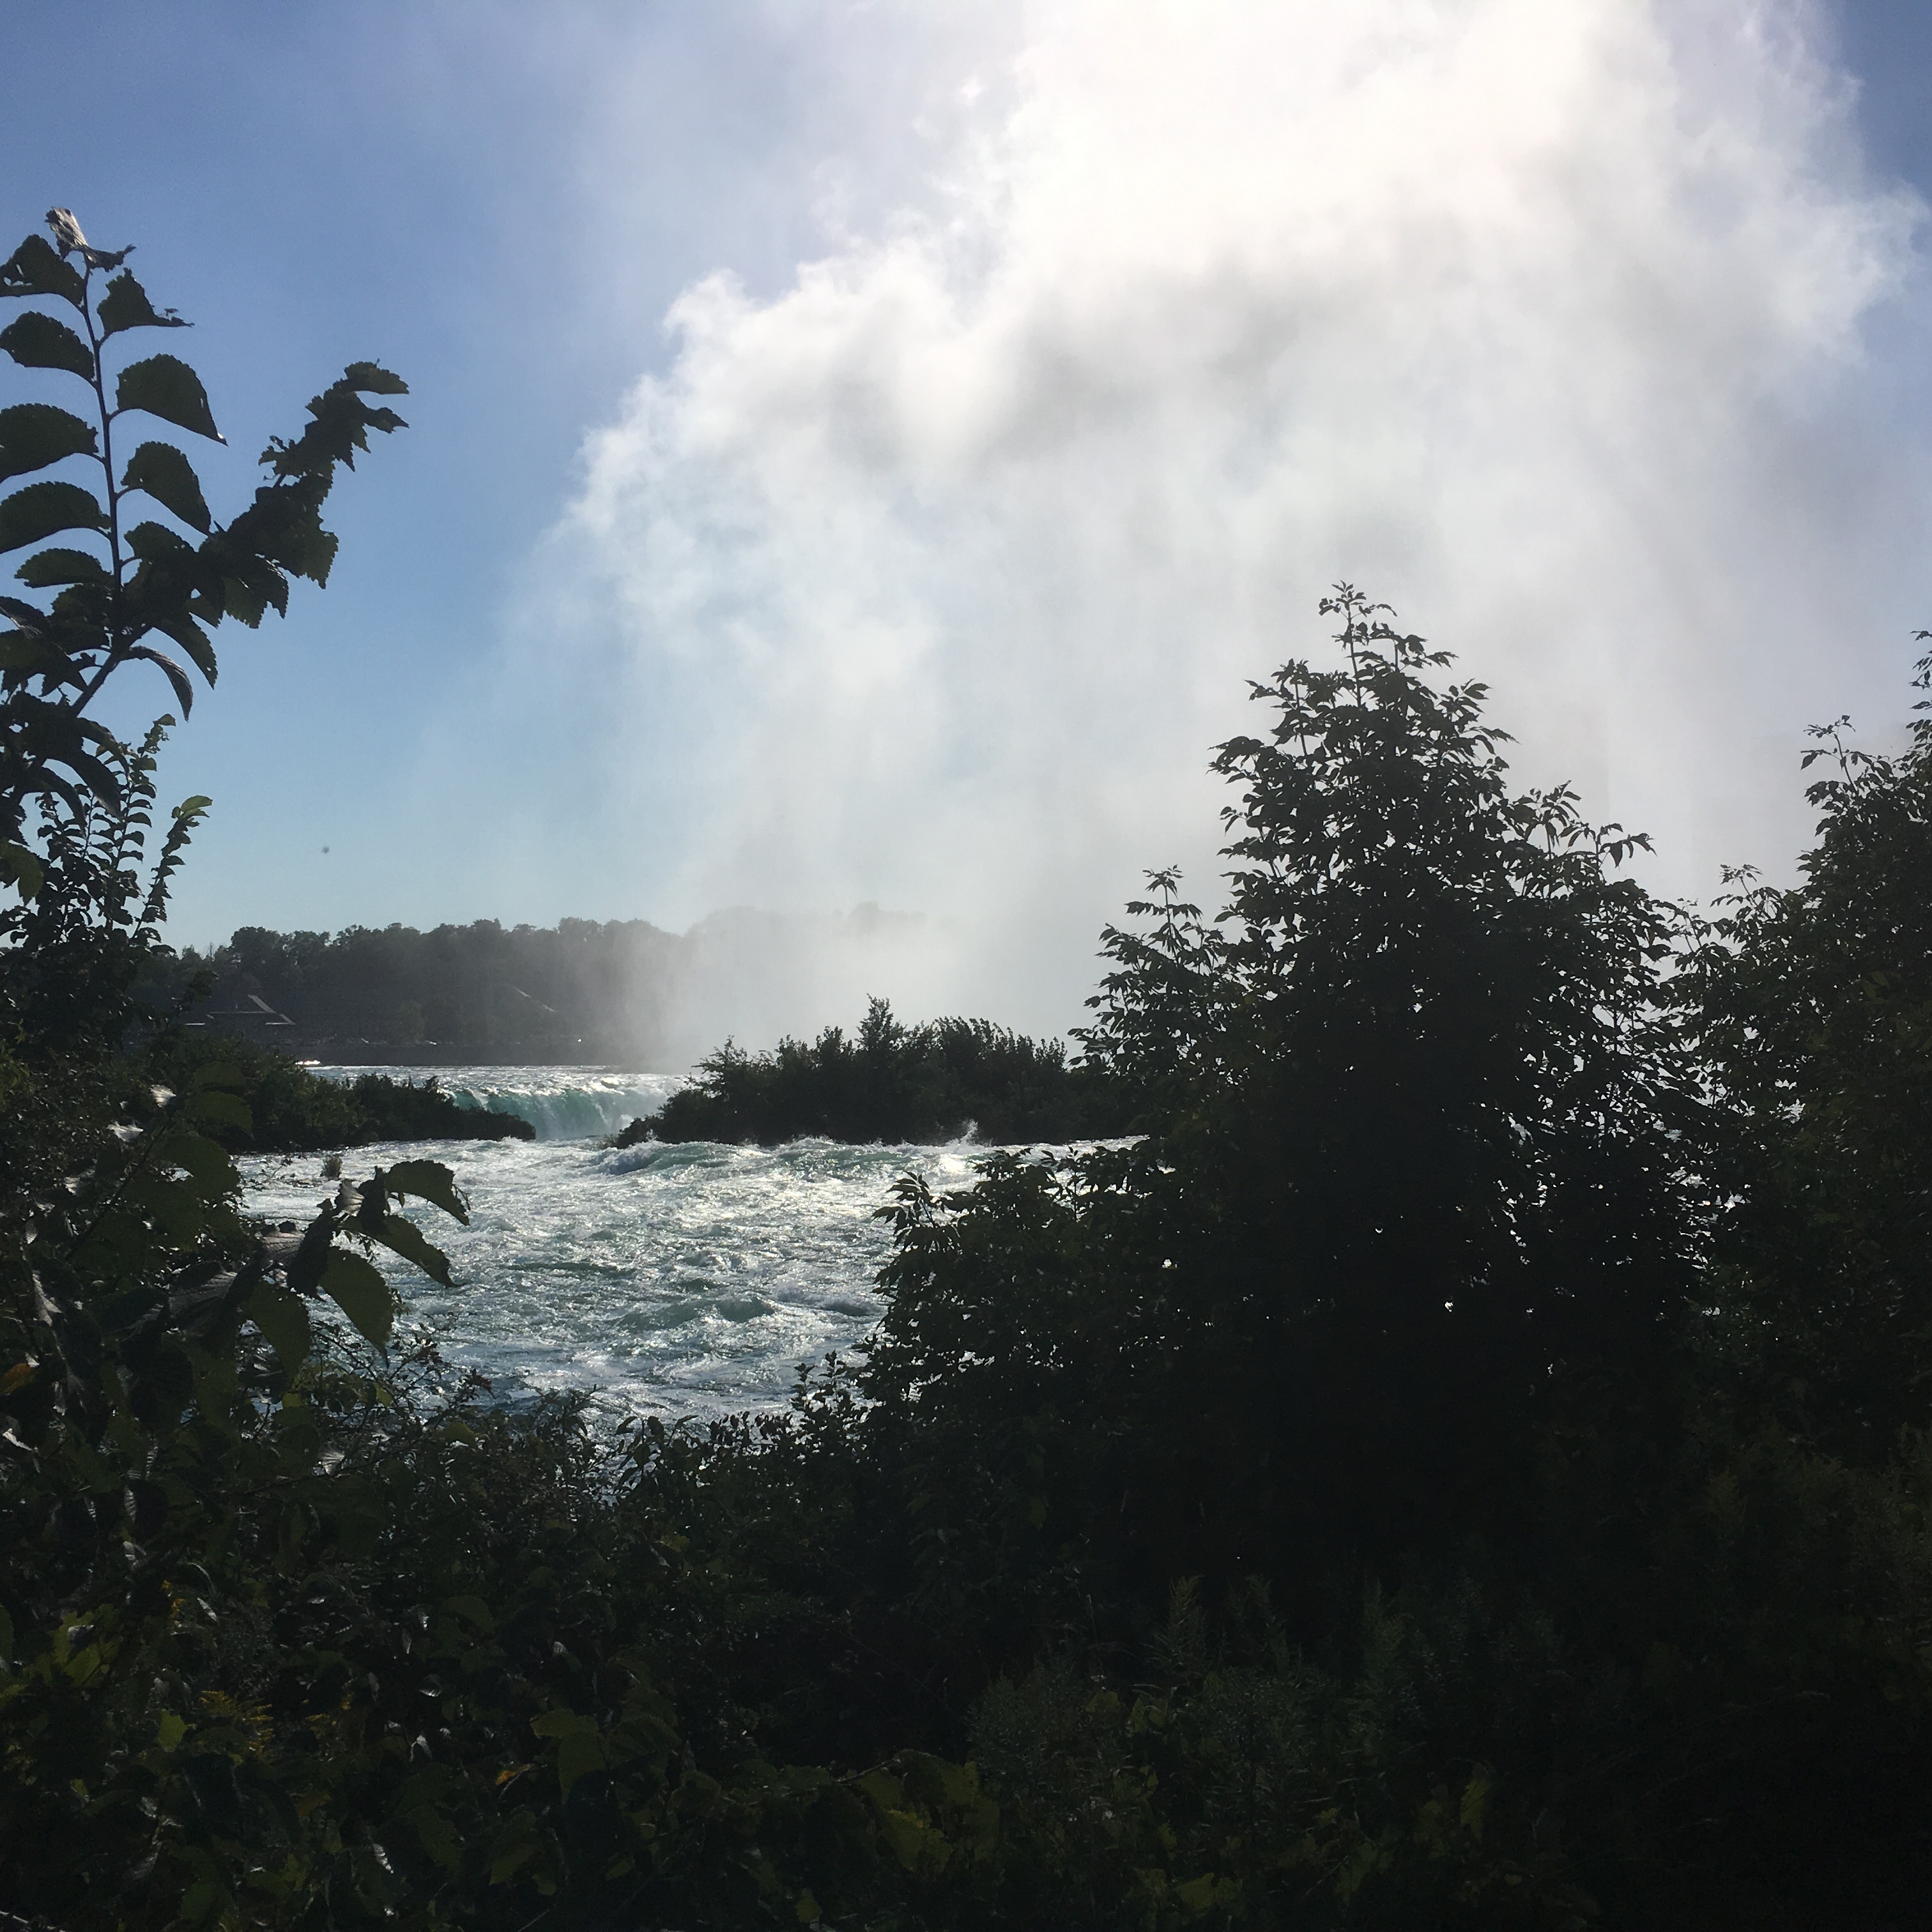 water from Niagara Falls splashing high between a clearing of brush, 2016